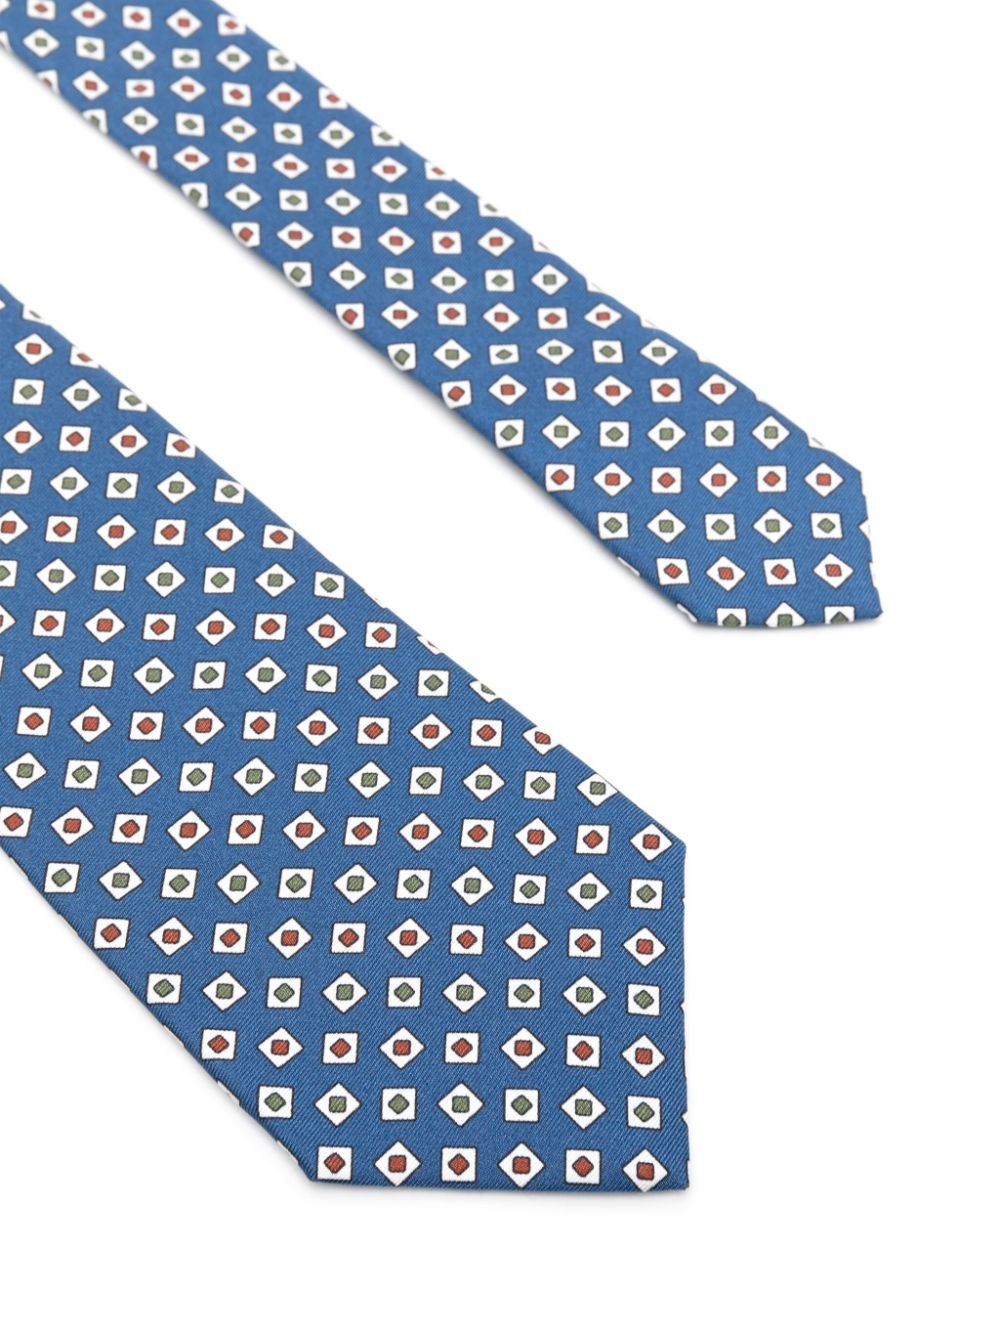 patterned-jacquard silk tie - 2